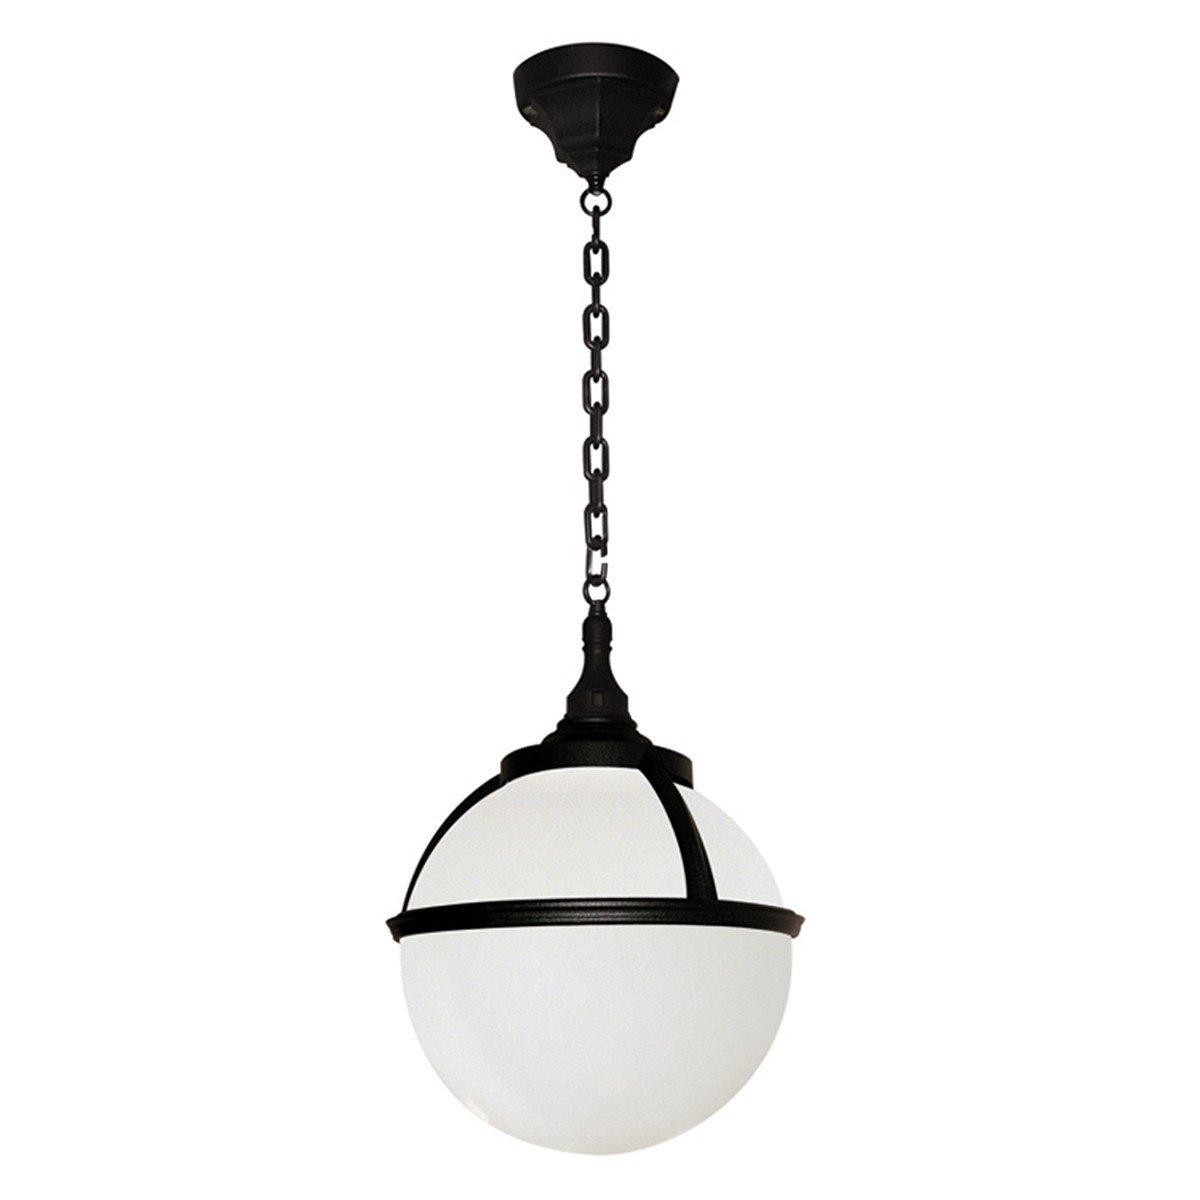 Glenbeigh 1 Light Outdoor Globe Ceiling Chain Lantern Black IP44 E27